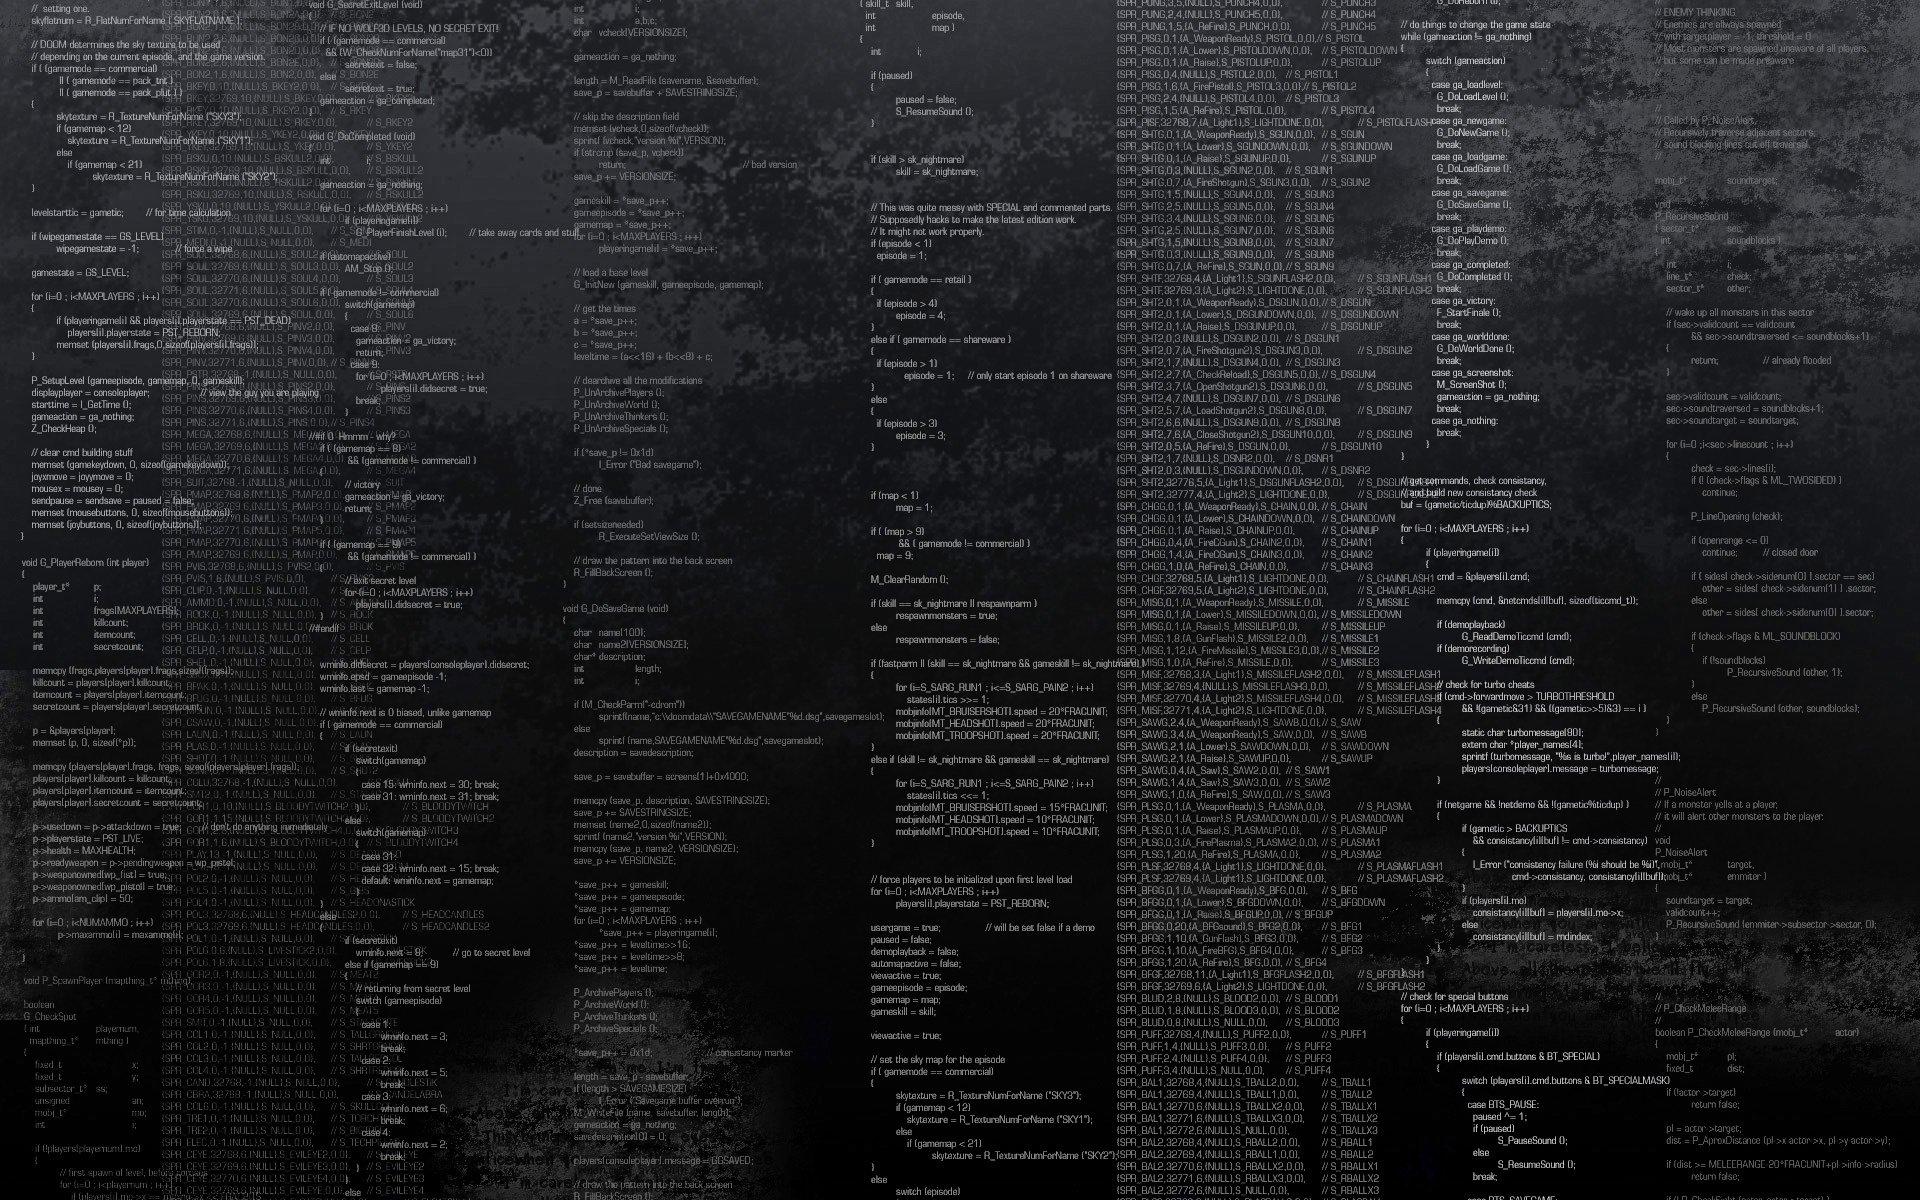 Programmer Code Wallpaper Background Free Download